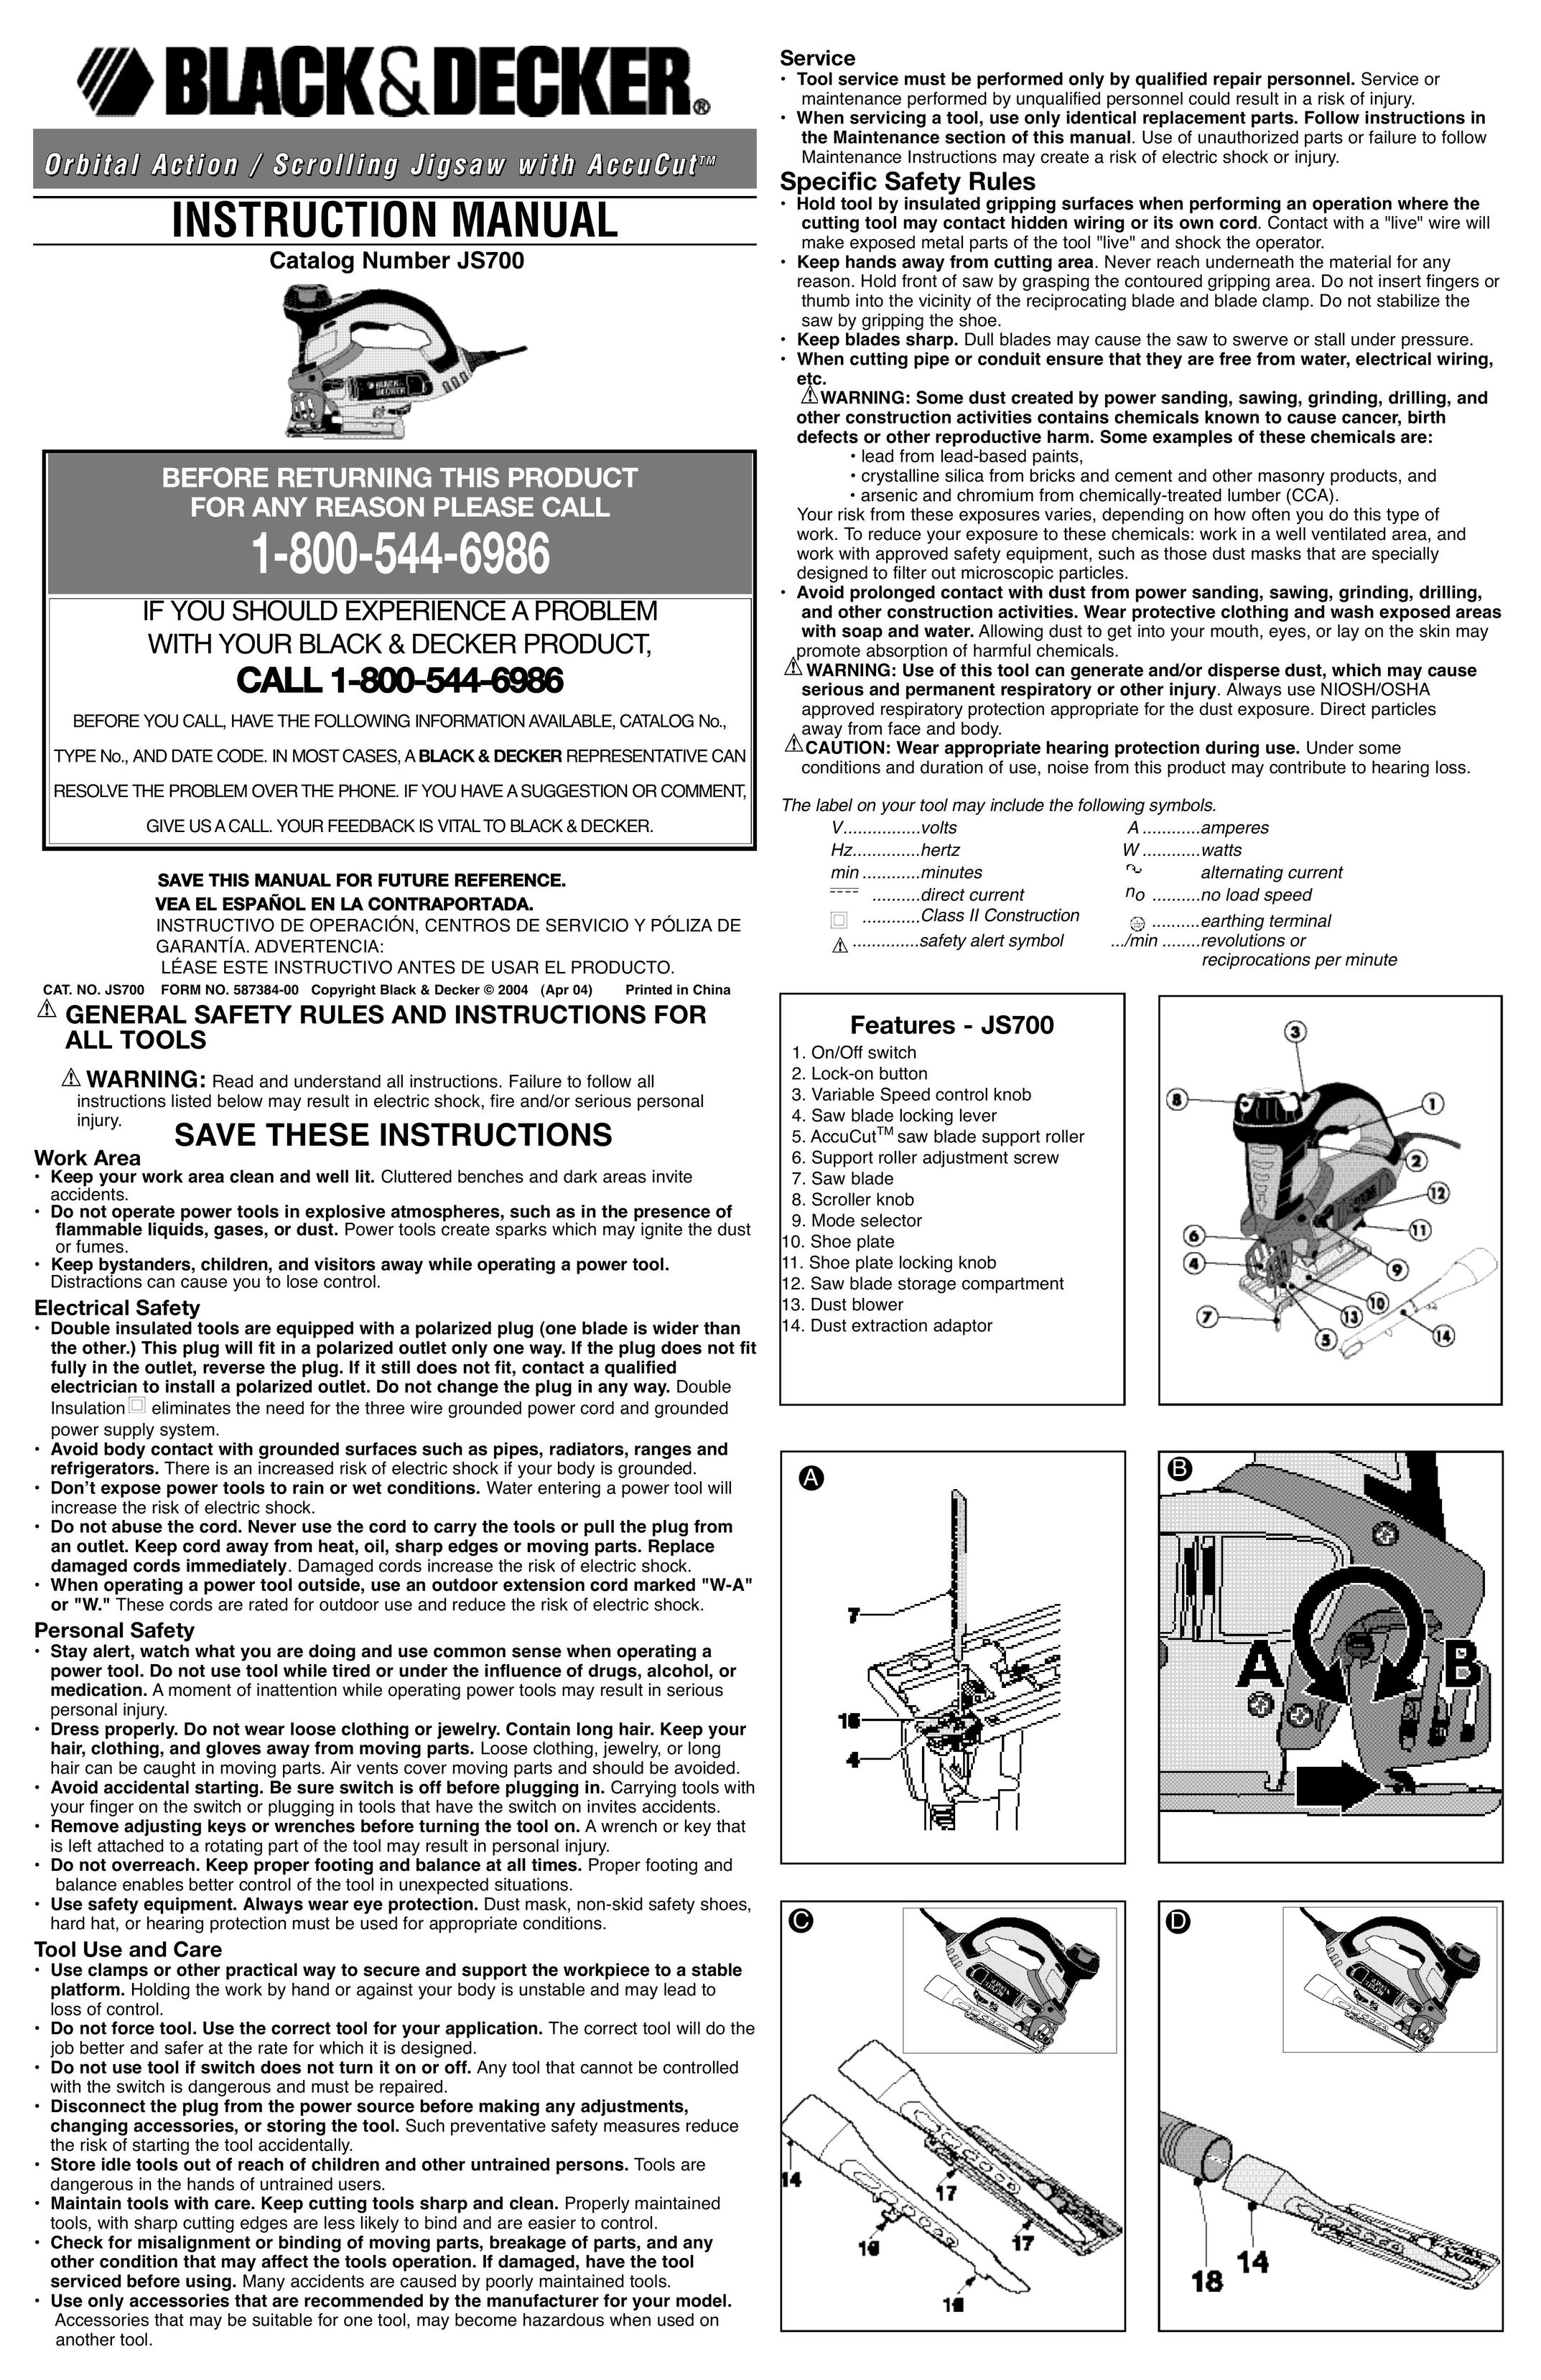 Black & Decker 587384-00 Saw User Manual